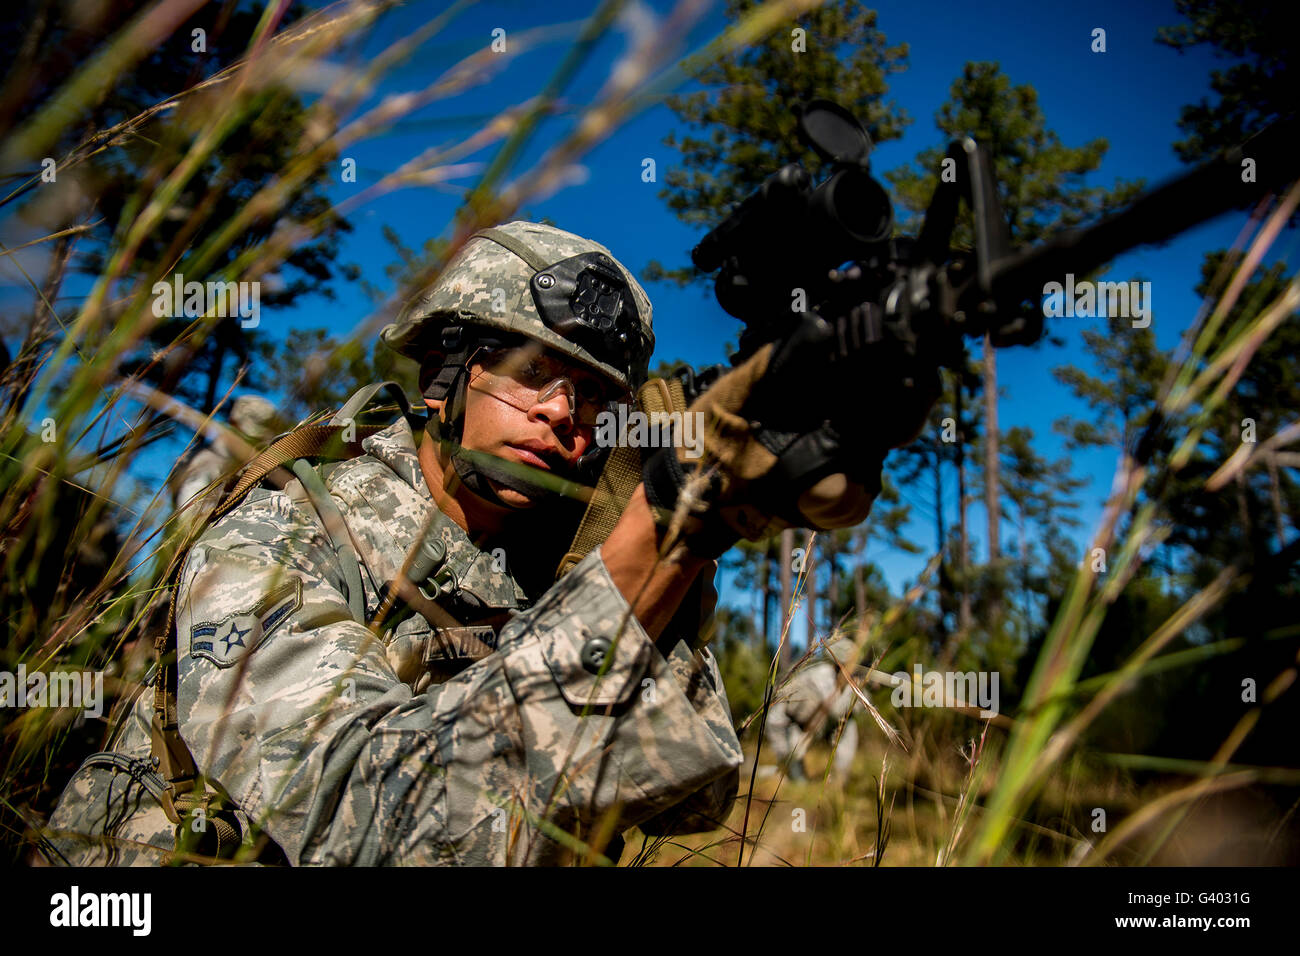 Airman aims an M-4 assault rifle. Stock Photo